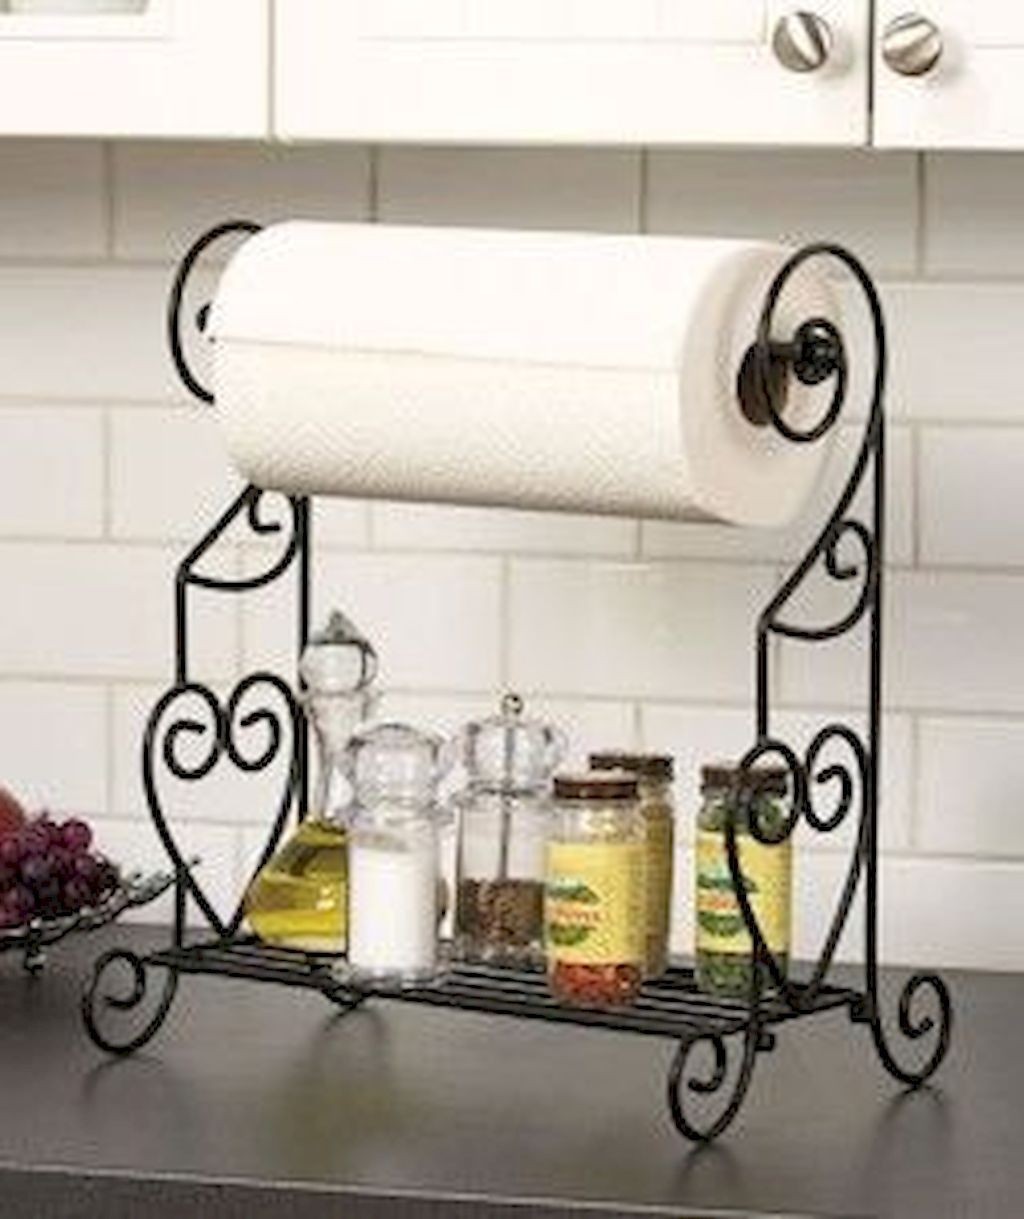 New black metal decorative paper towel rack holder with shelf